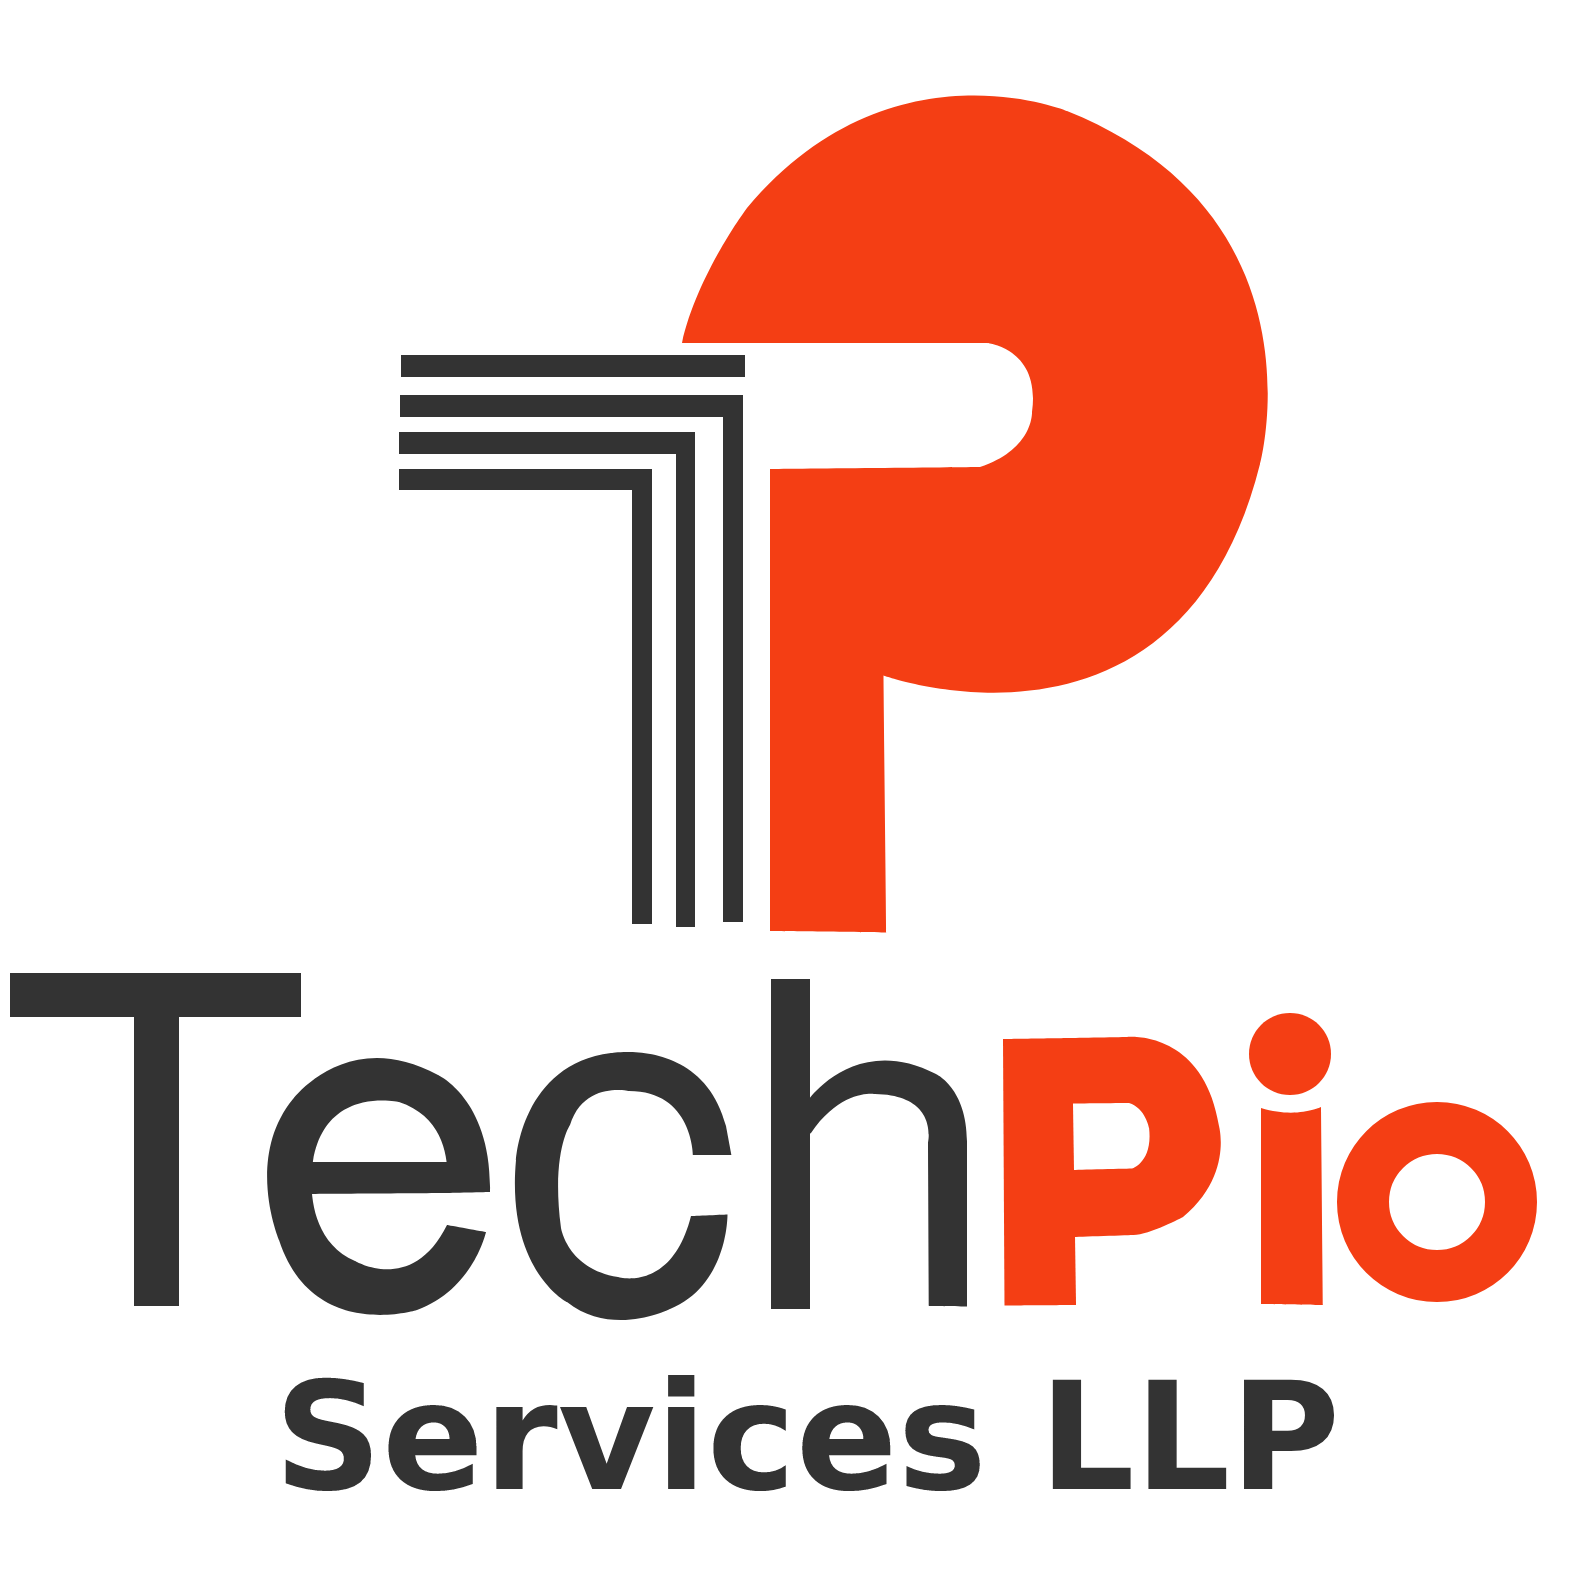 TechPio-logo